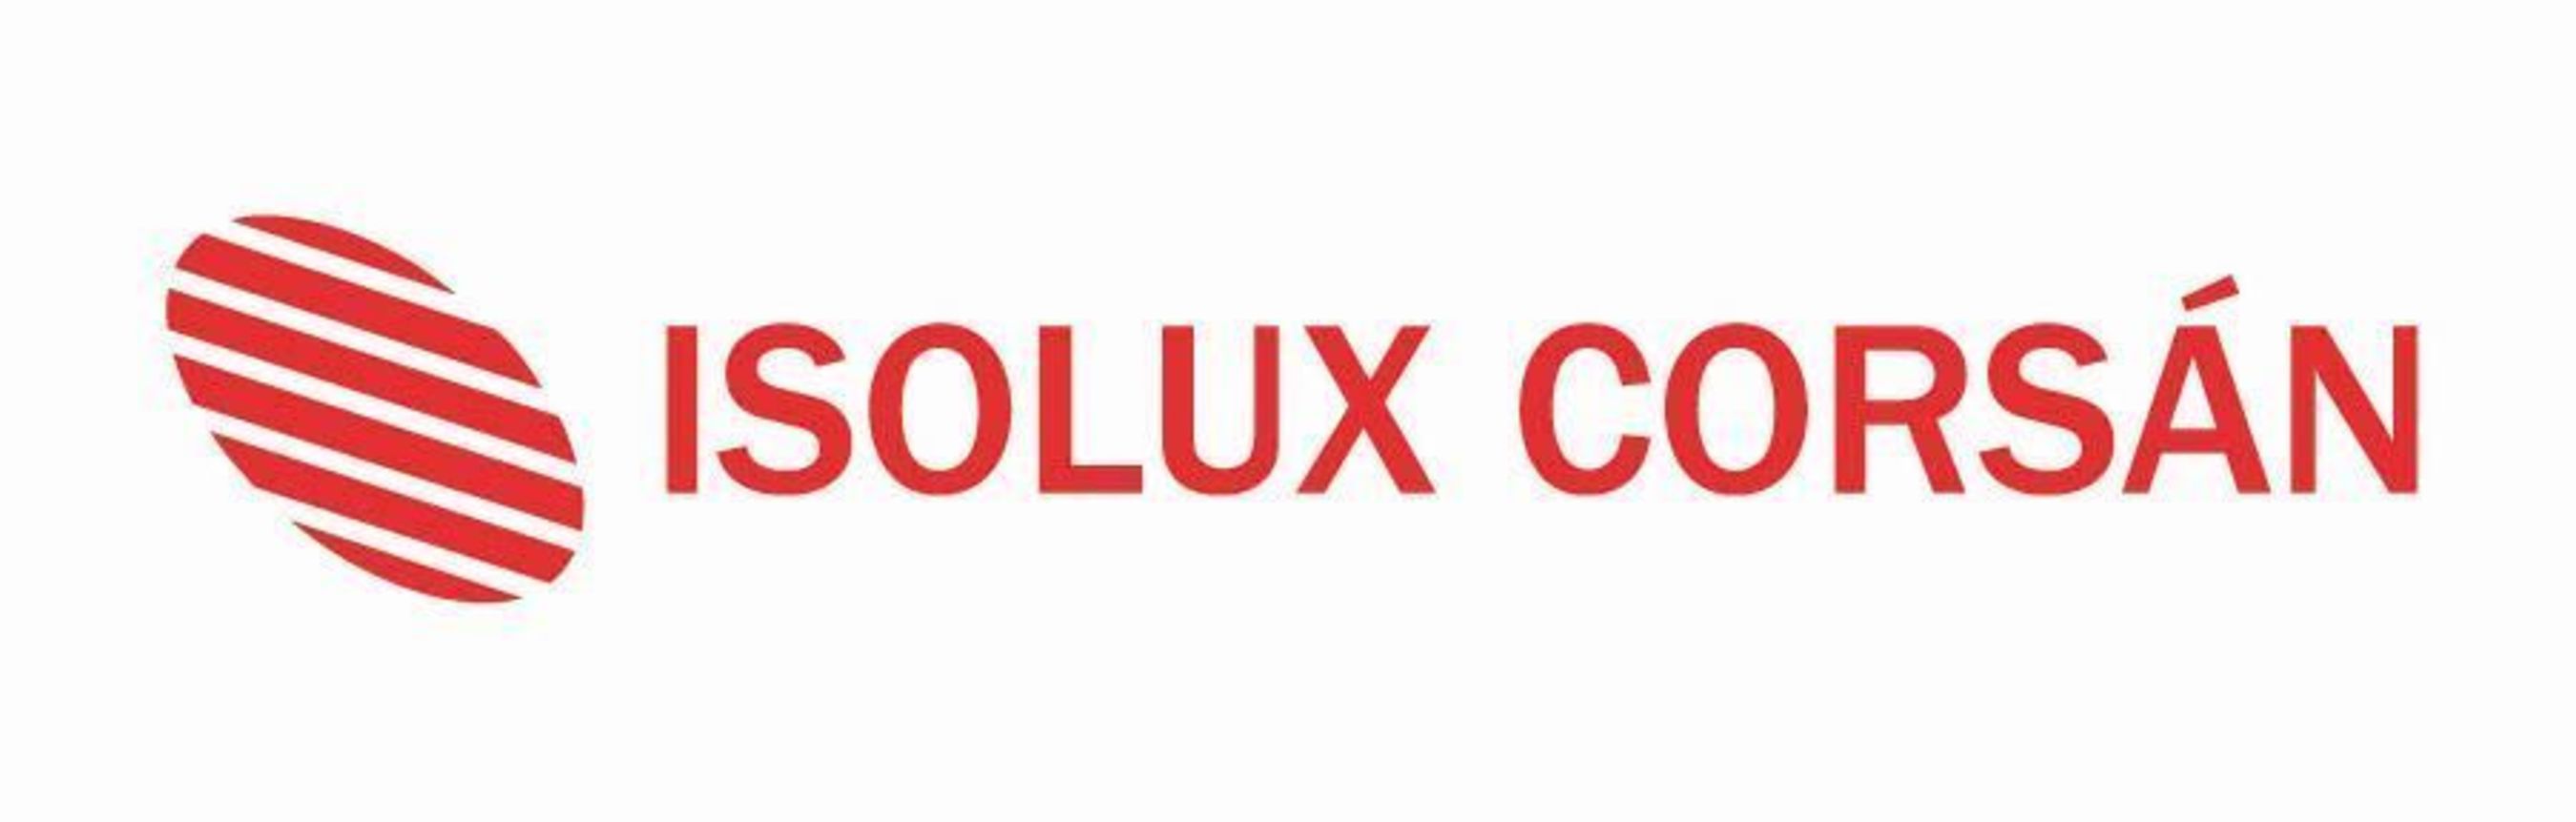 Isolux Corsan logo (PRNewsFoto/Isolux Corsan)